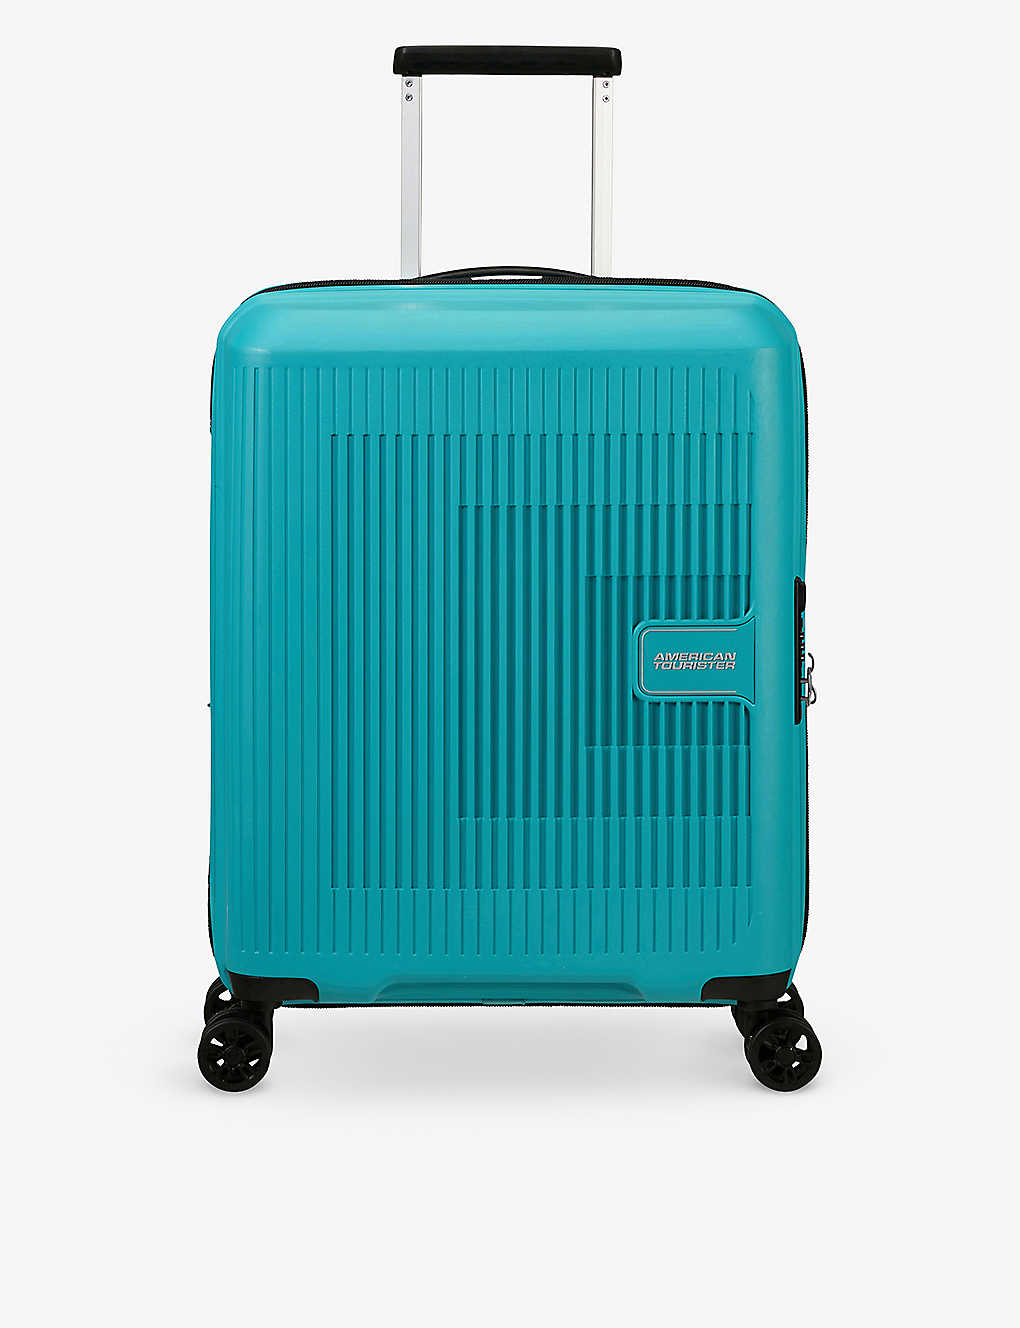 American Tourister Turquuoise Tonic Aerostep Expandable Four-wheel Suitcase 55cm